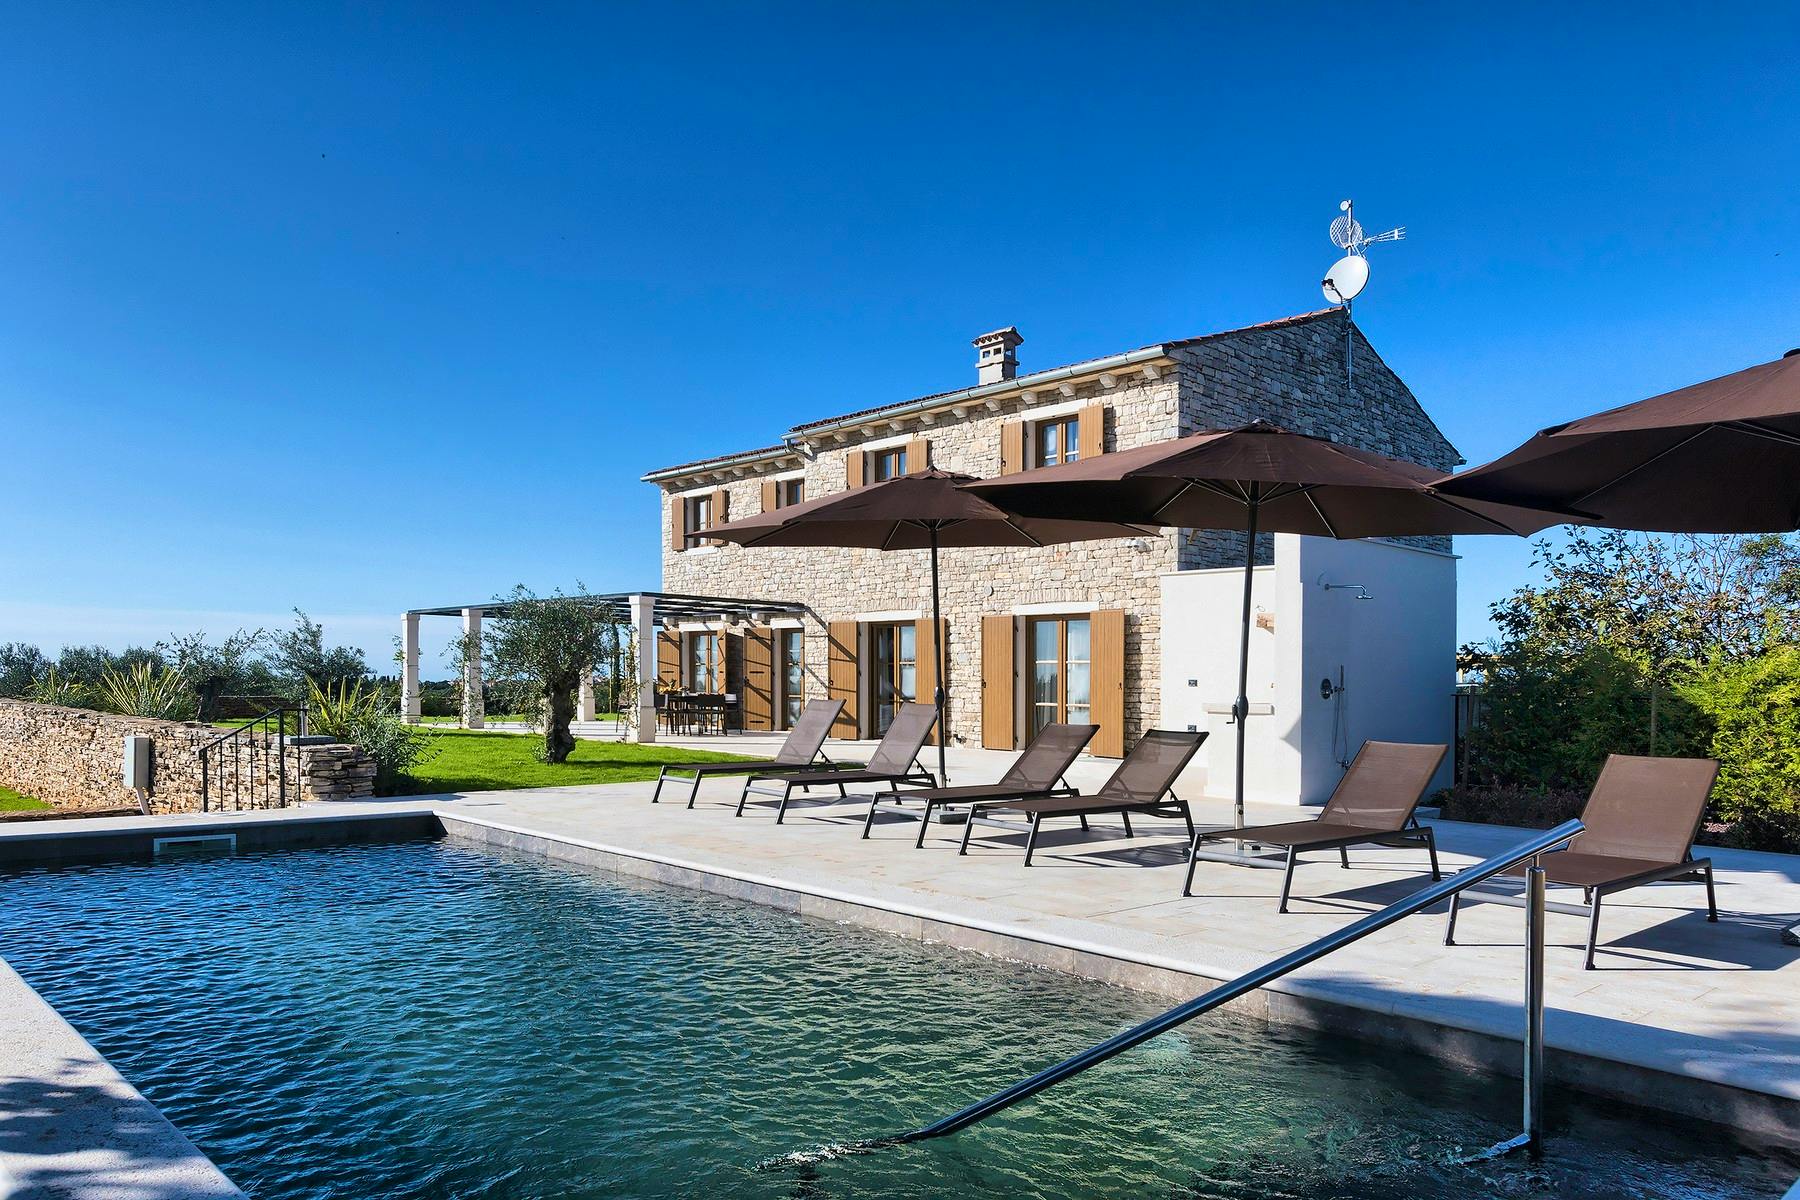 Rustic stone villa with pool 